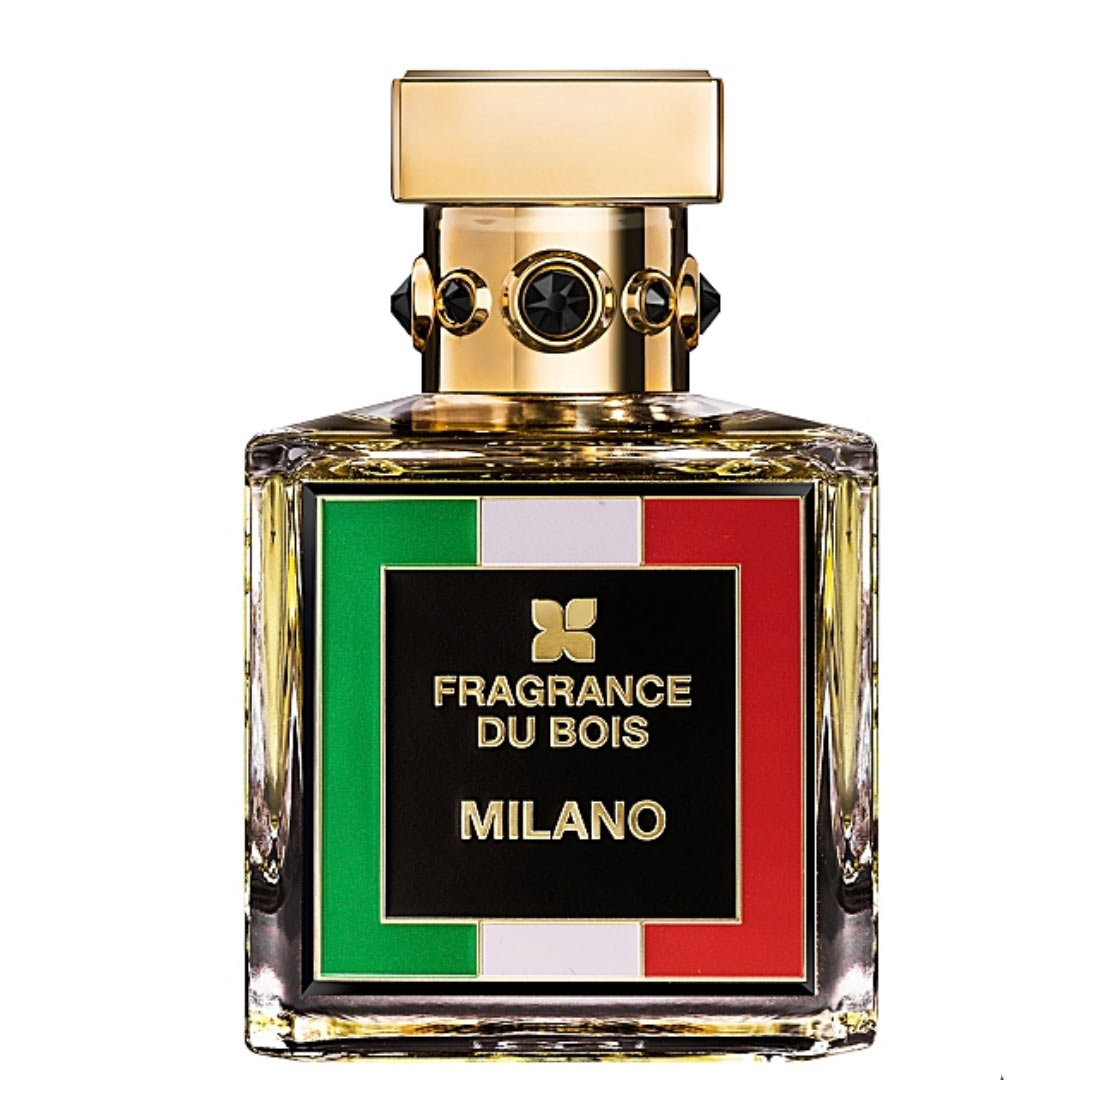 Milano-Flag-Edition-Fragrance-Du-Bois